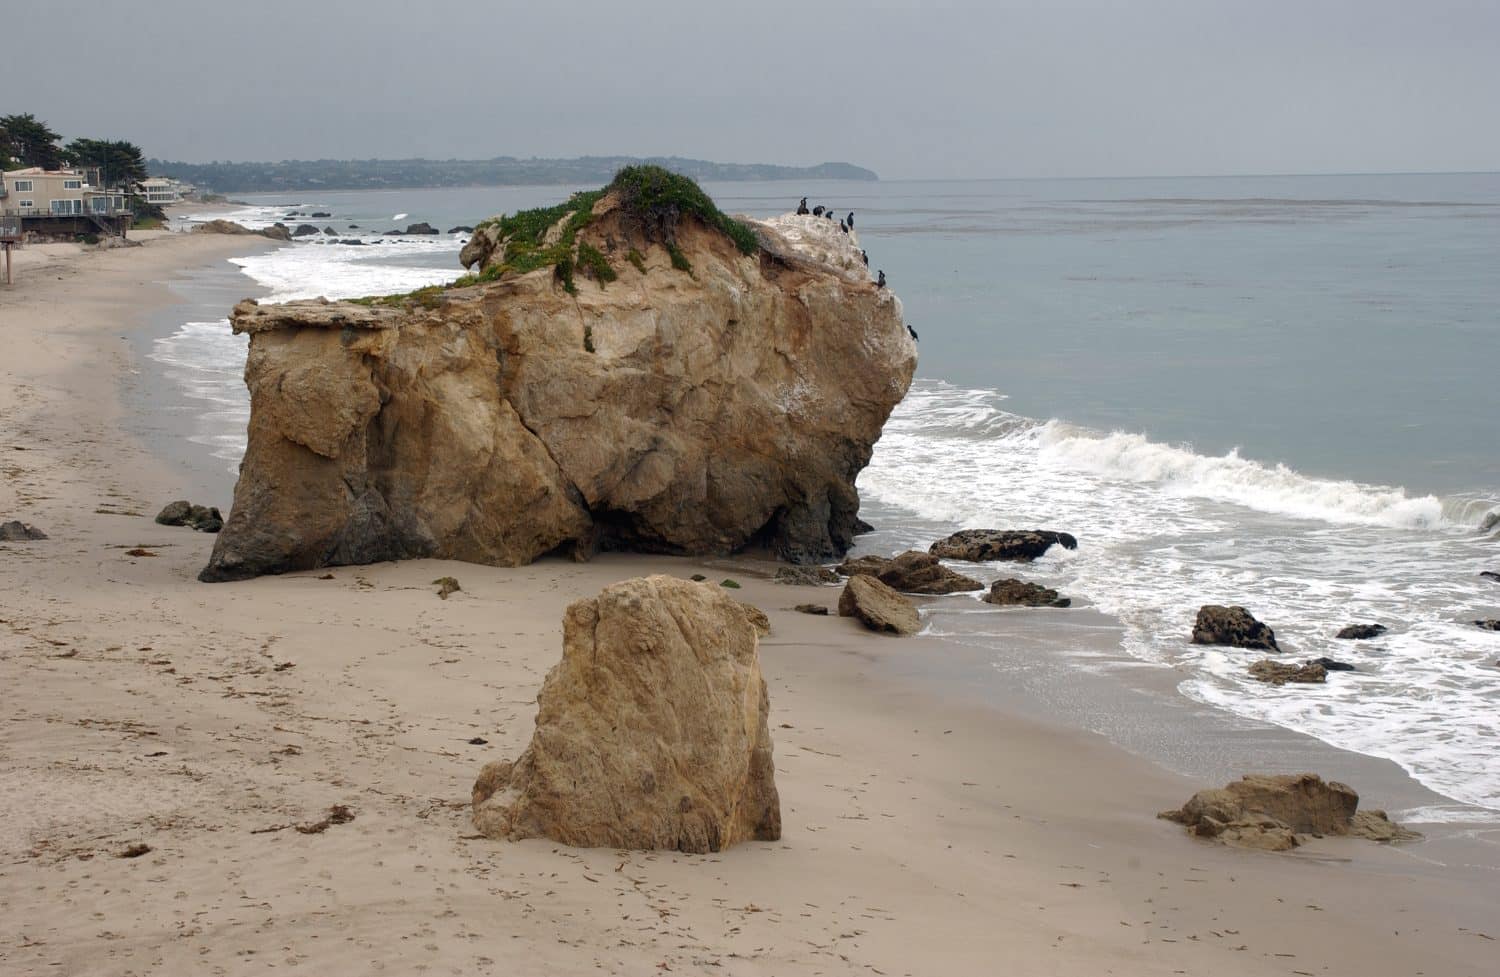  Rocks along Leo Carillo Beach in southern California with waves crashing along the beach